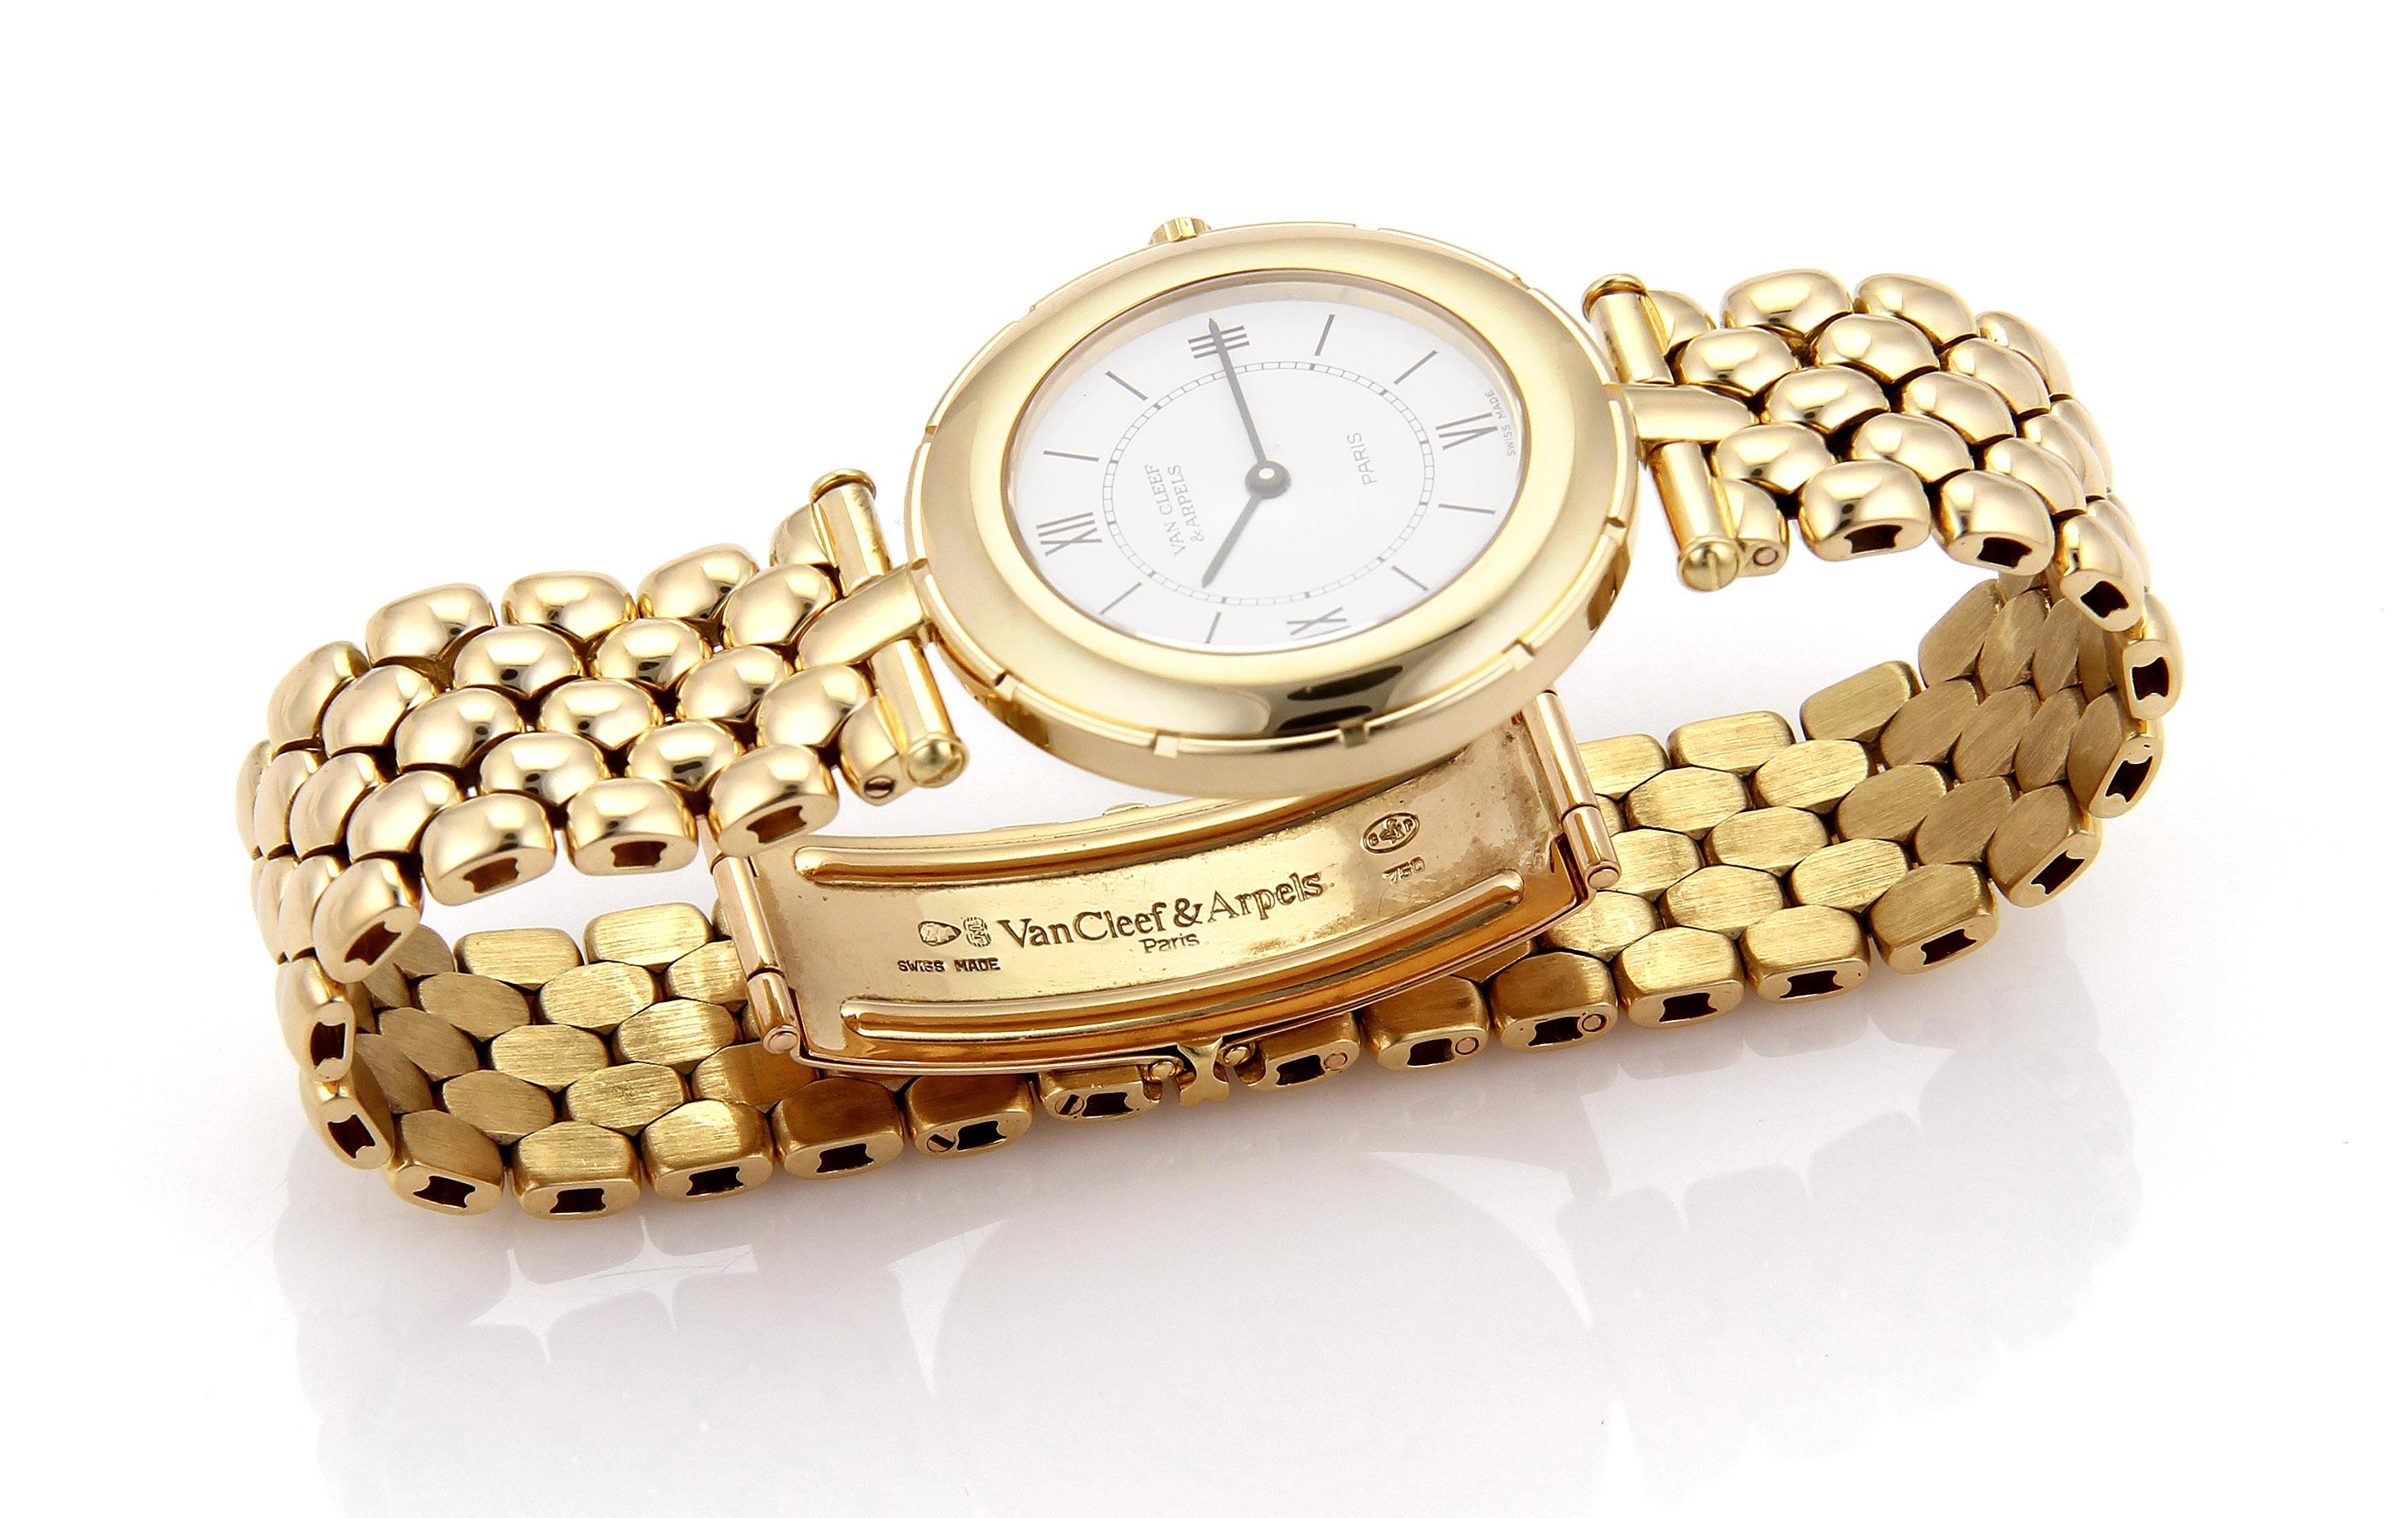 Van Cleef & Arpels 18k Yellow Gold Ladies Wrist Watch Quartz 13107 For Sale 1